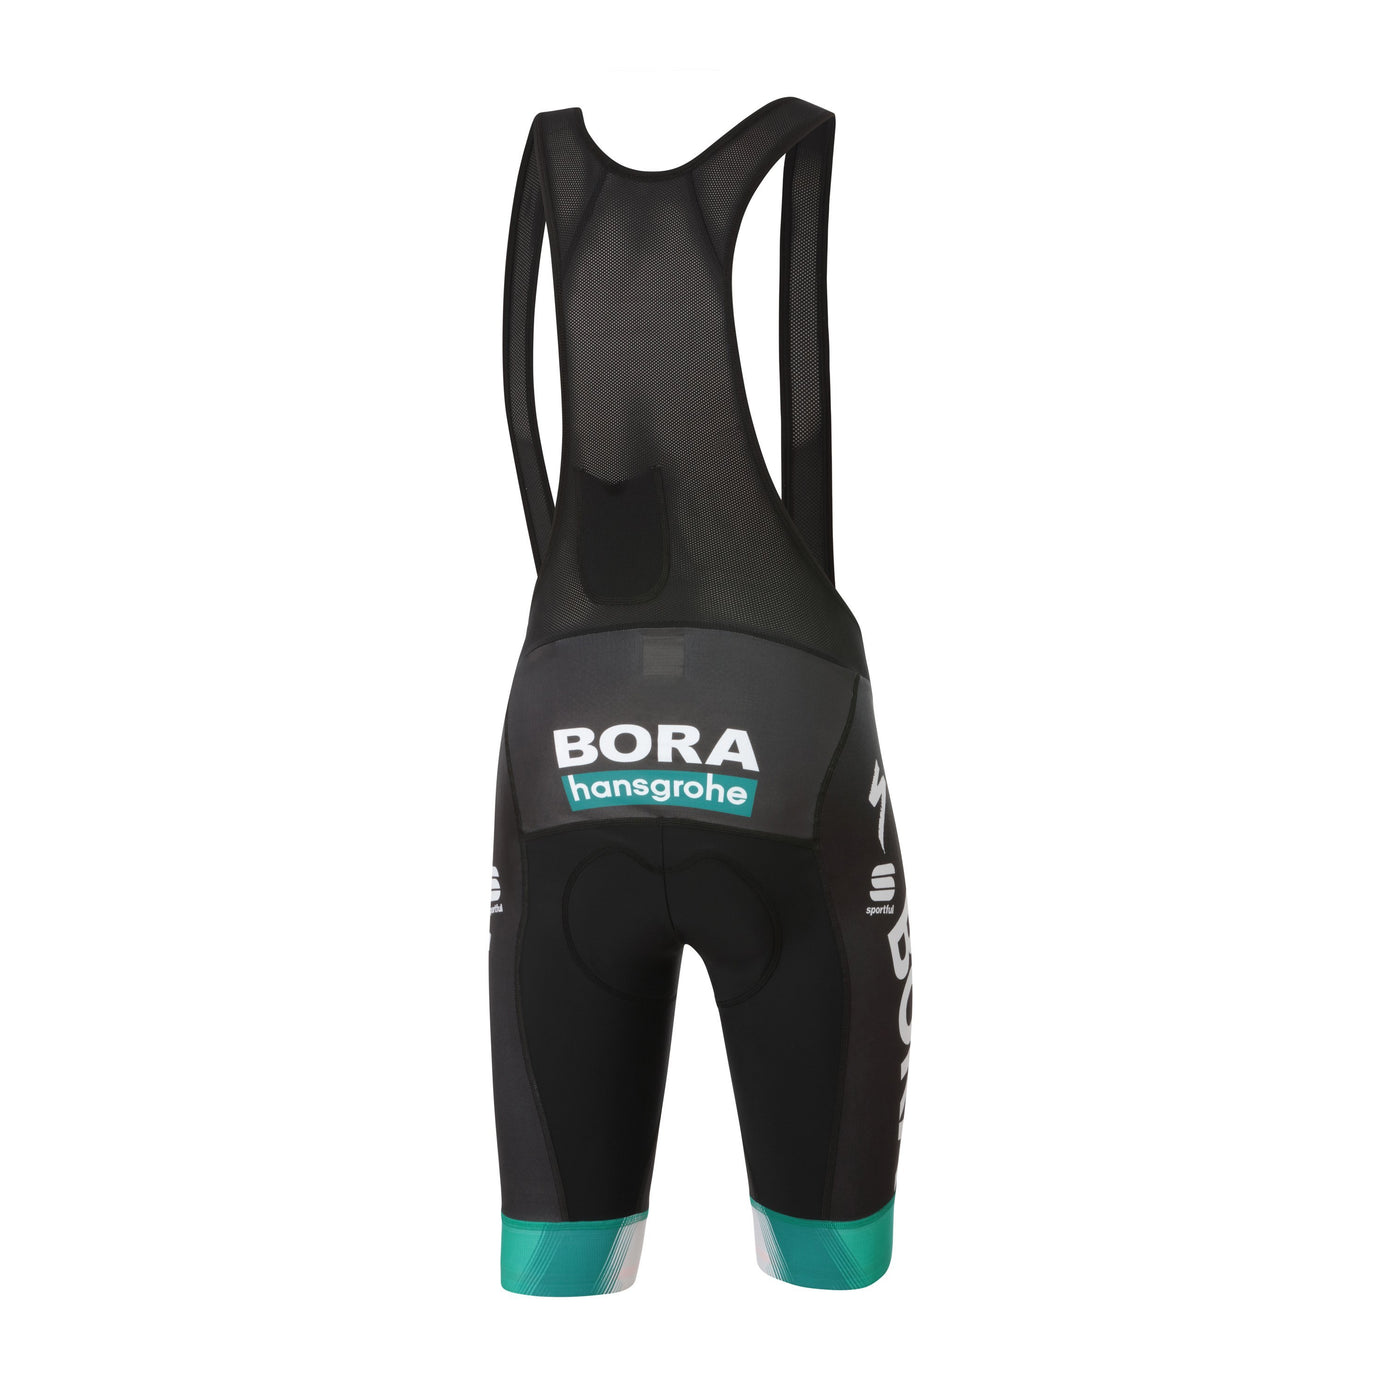 Sportful BFP Hansgroh Slovak Champion Bib Shorts Bora - Cyclop.in